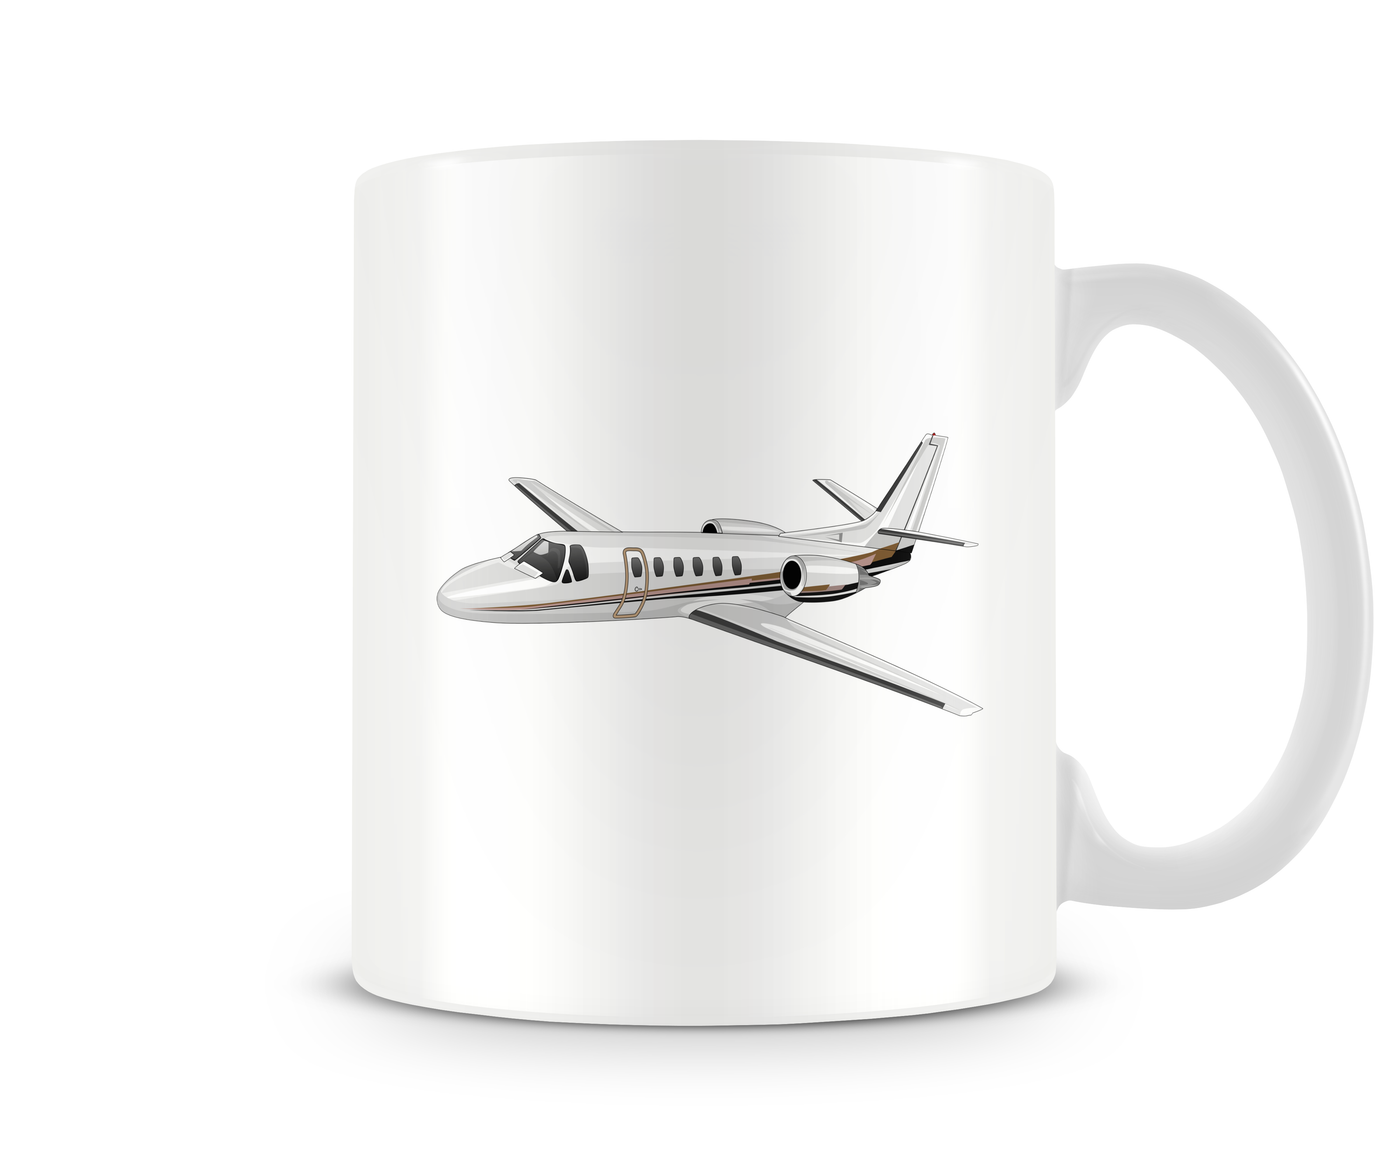 Cessna Citation Bravo Mug - Aircraft Mugs